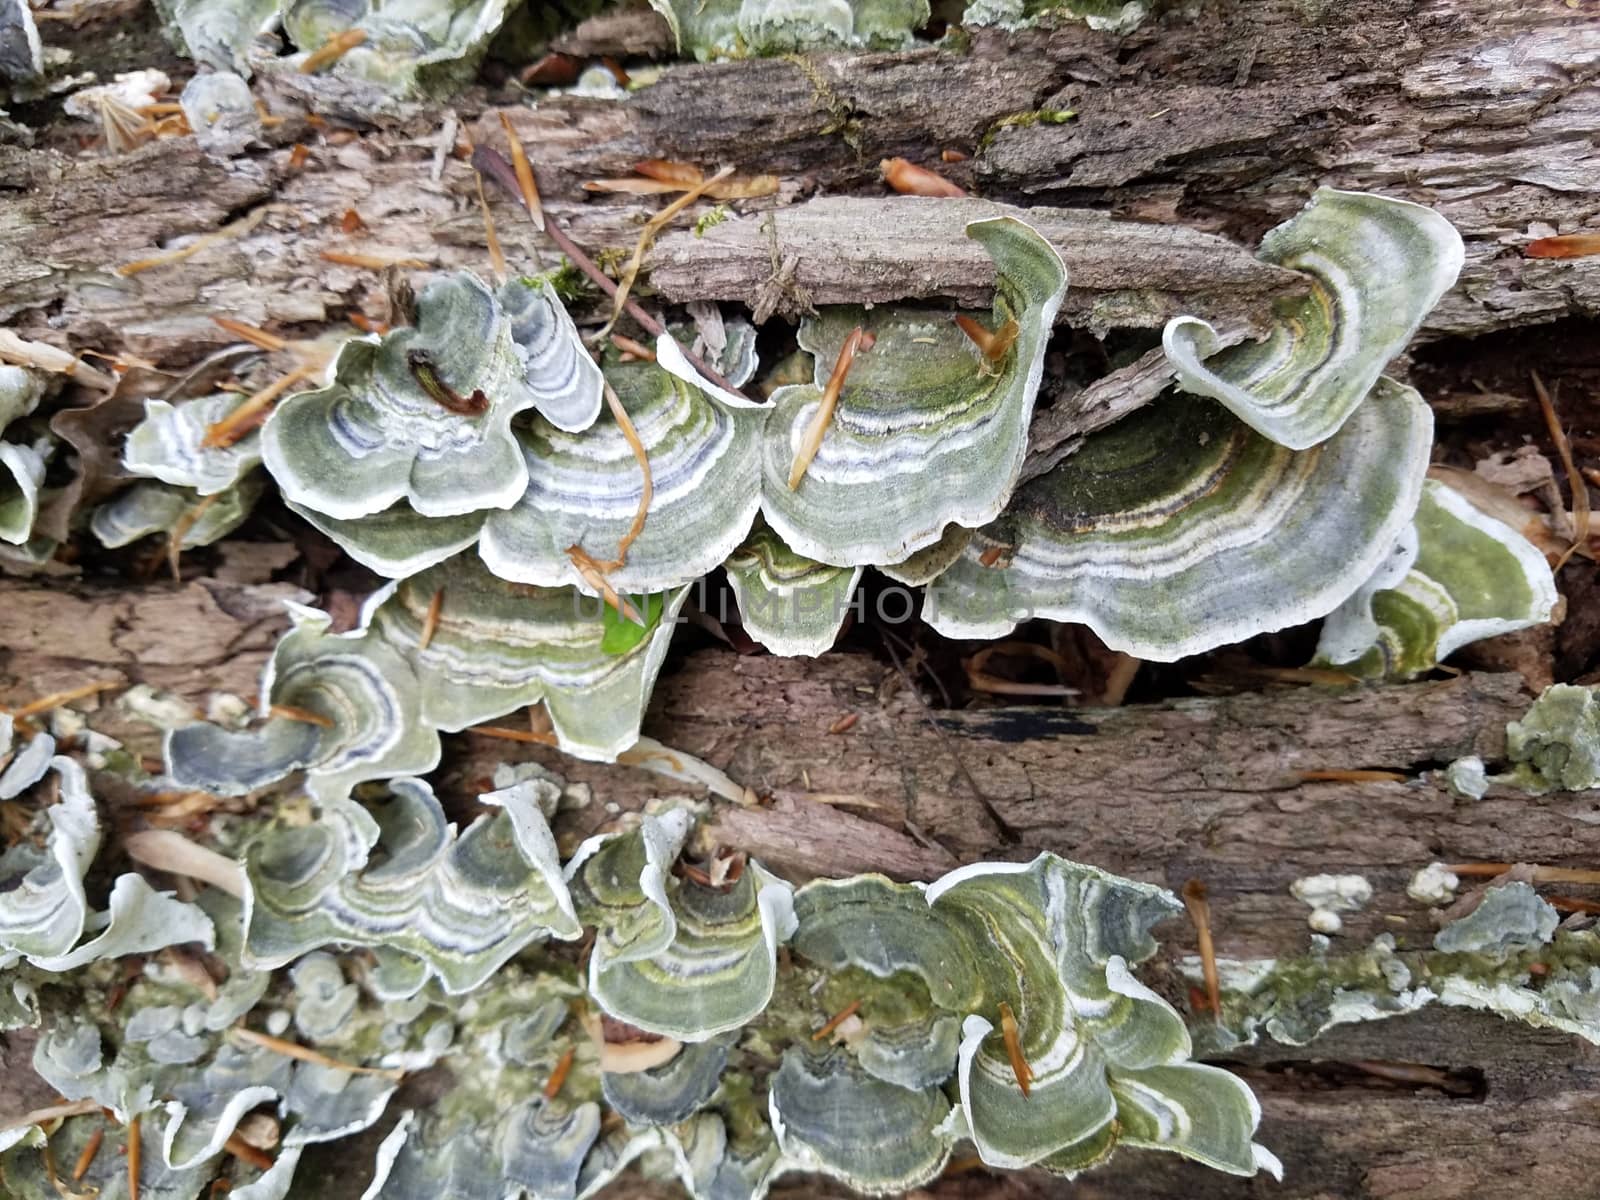 green and grey fungus or mushroom on rotting log by stockphotofan1